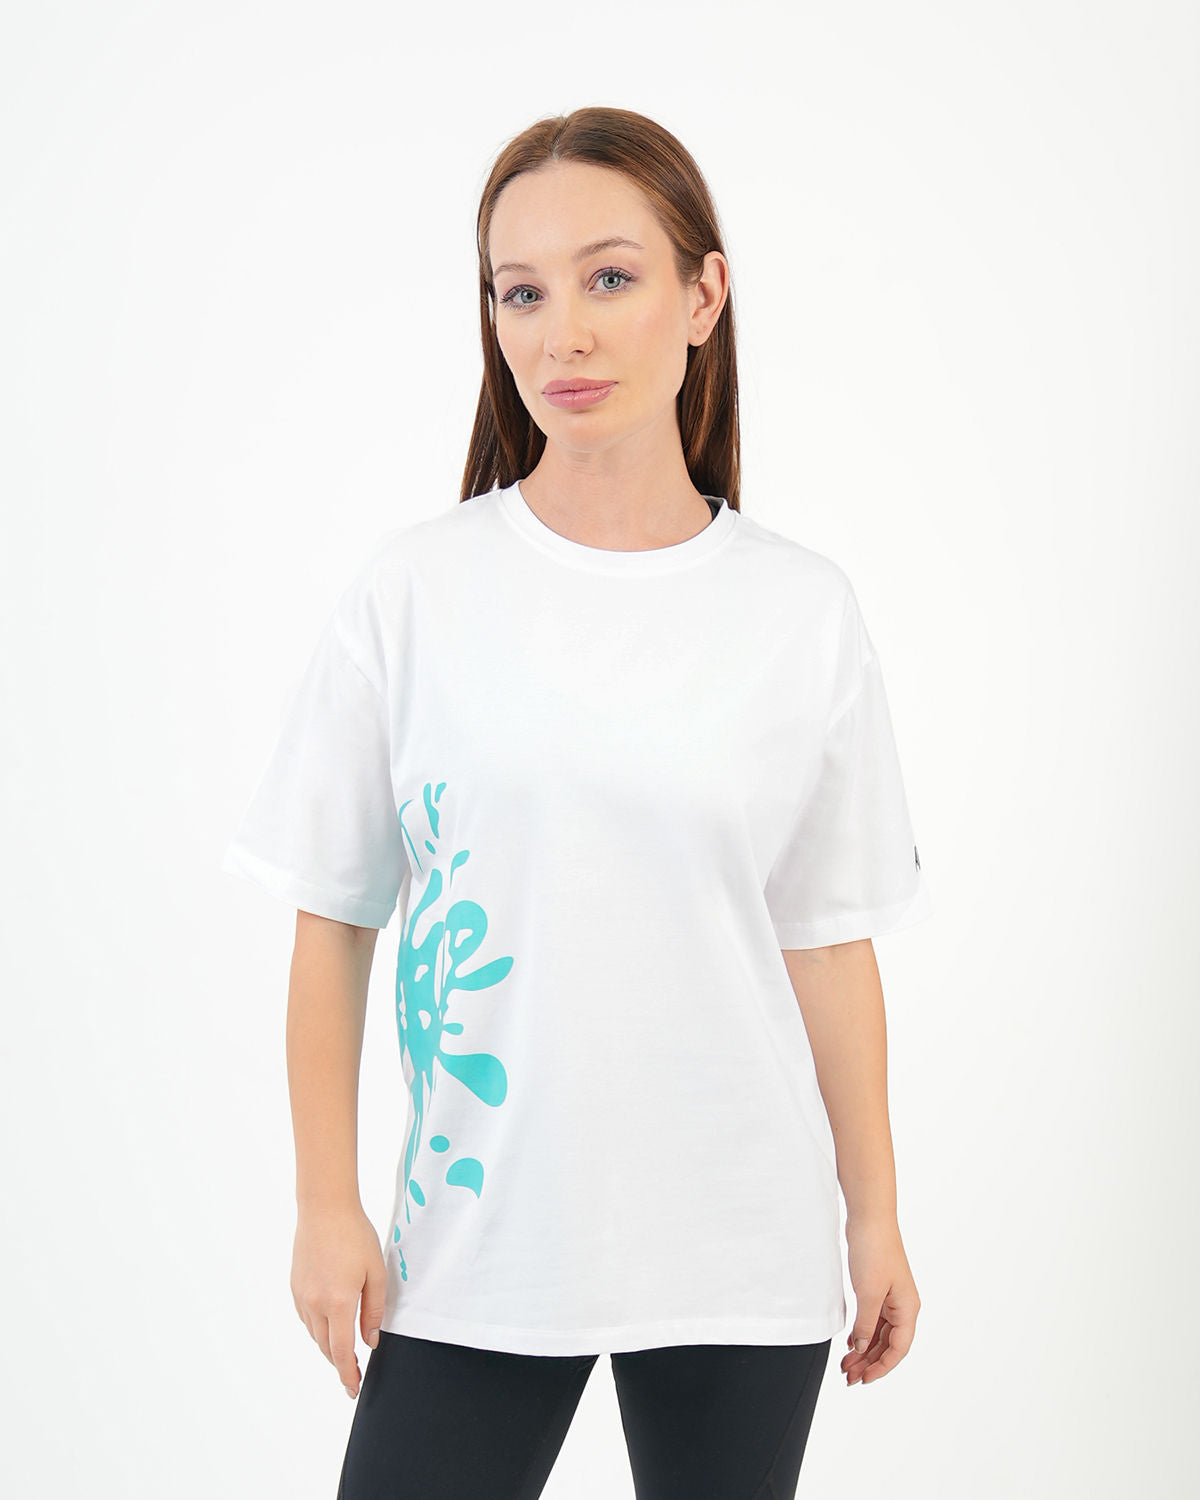 Oversized Splash Women's T-Shirt - White With DarkTurquoise panting